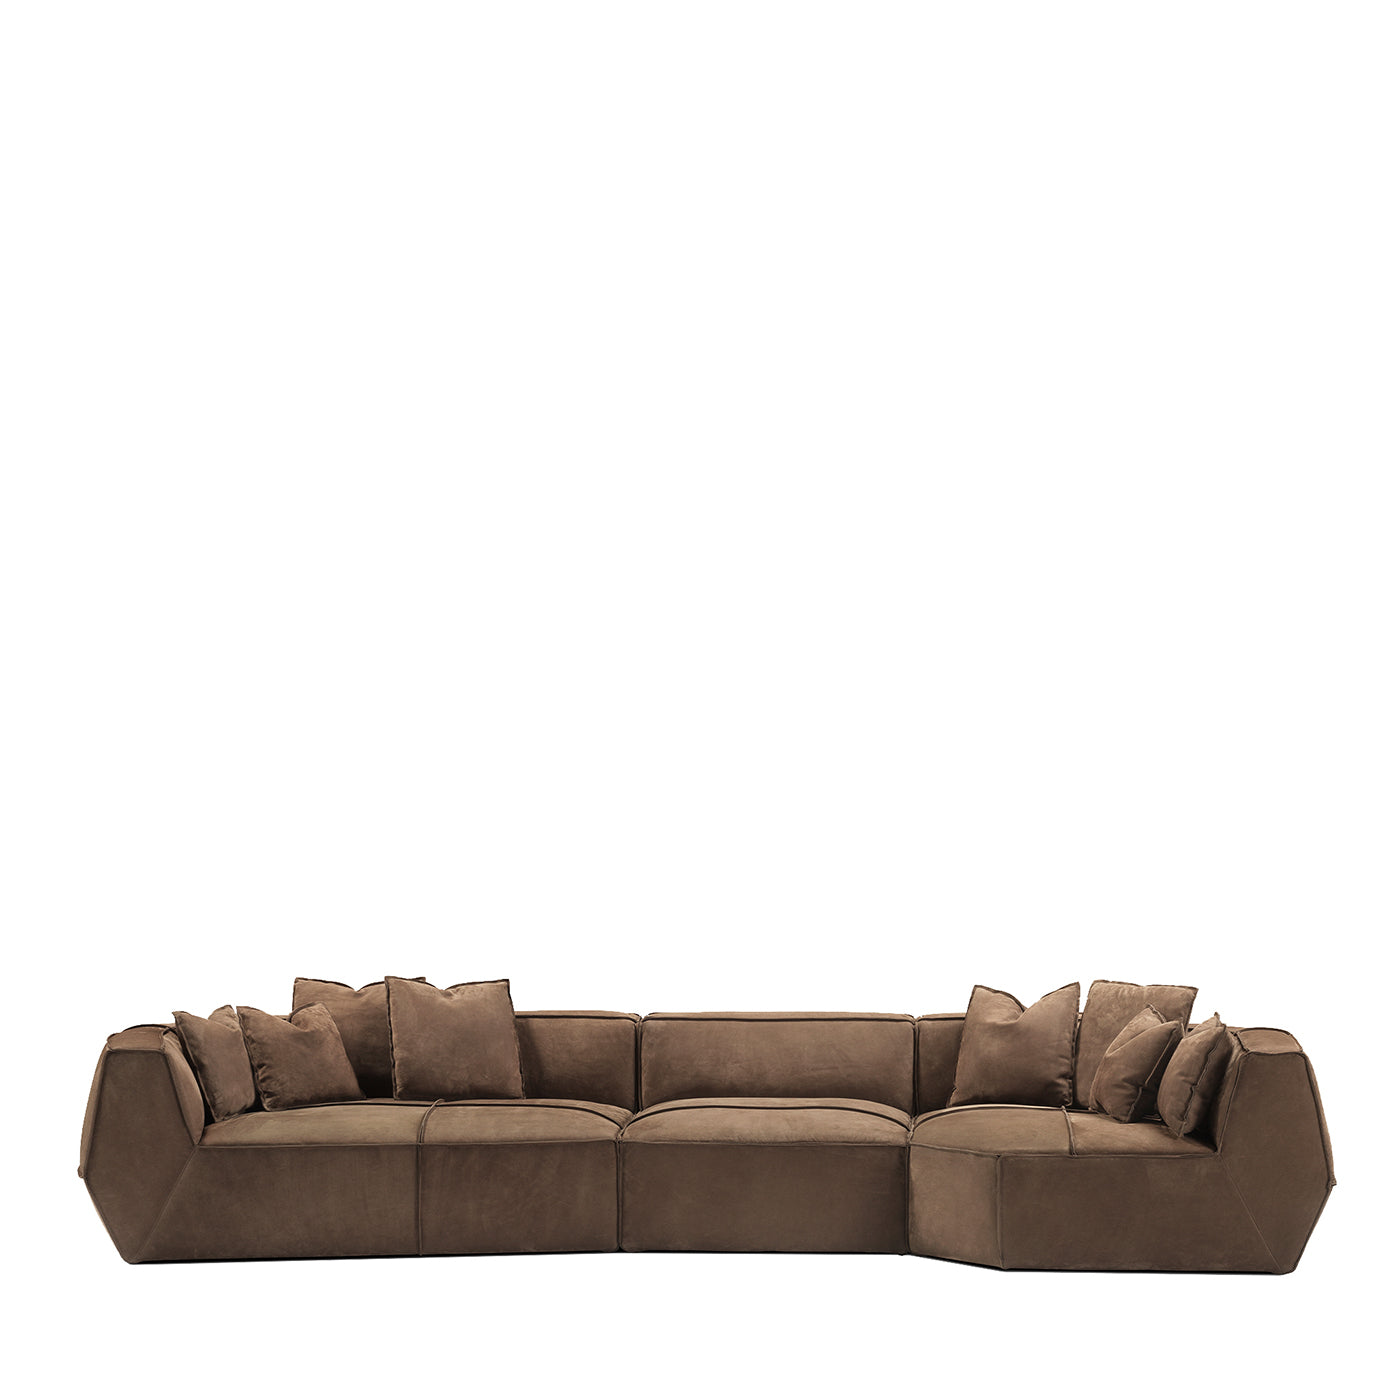 Infinito Large Brown Sofa by Lorenza Bozzoli - Main view